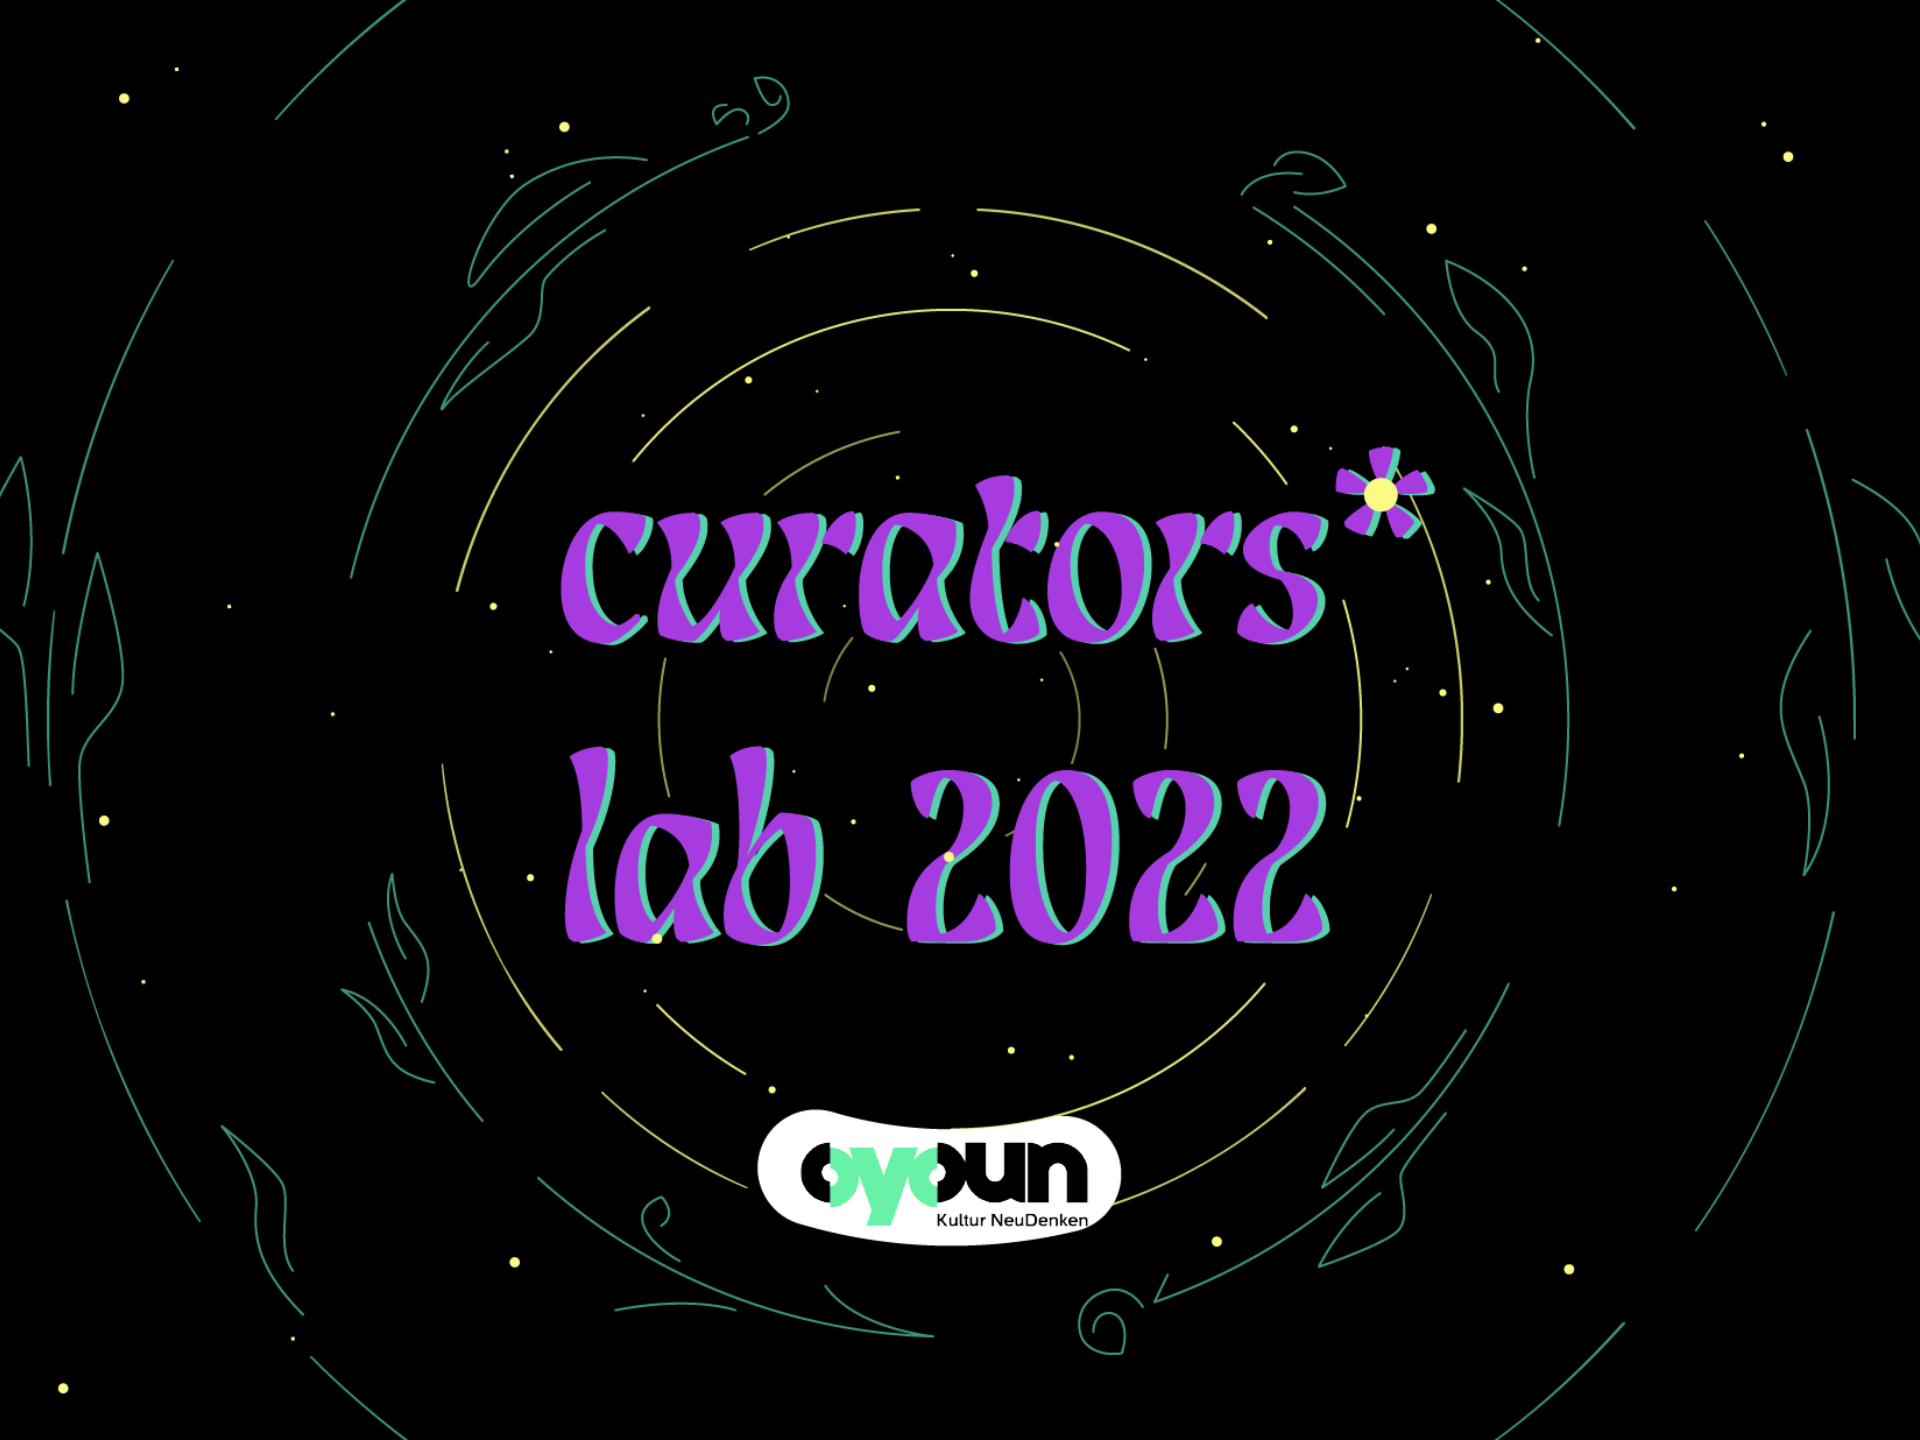 Curators* LAB 2022